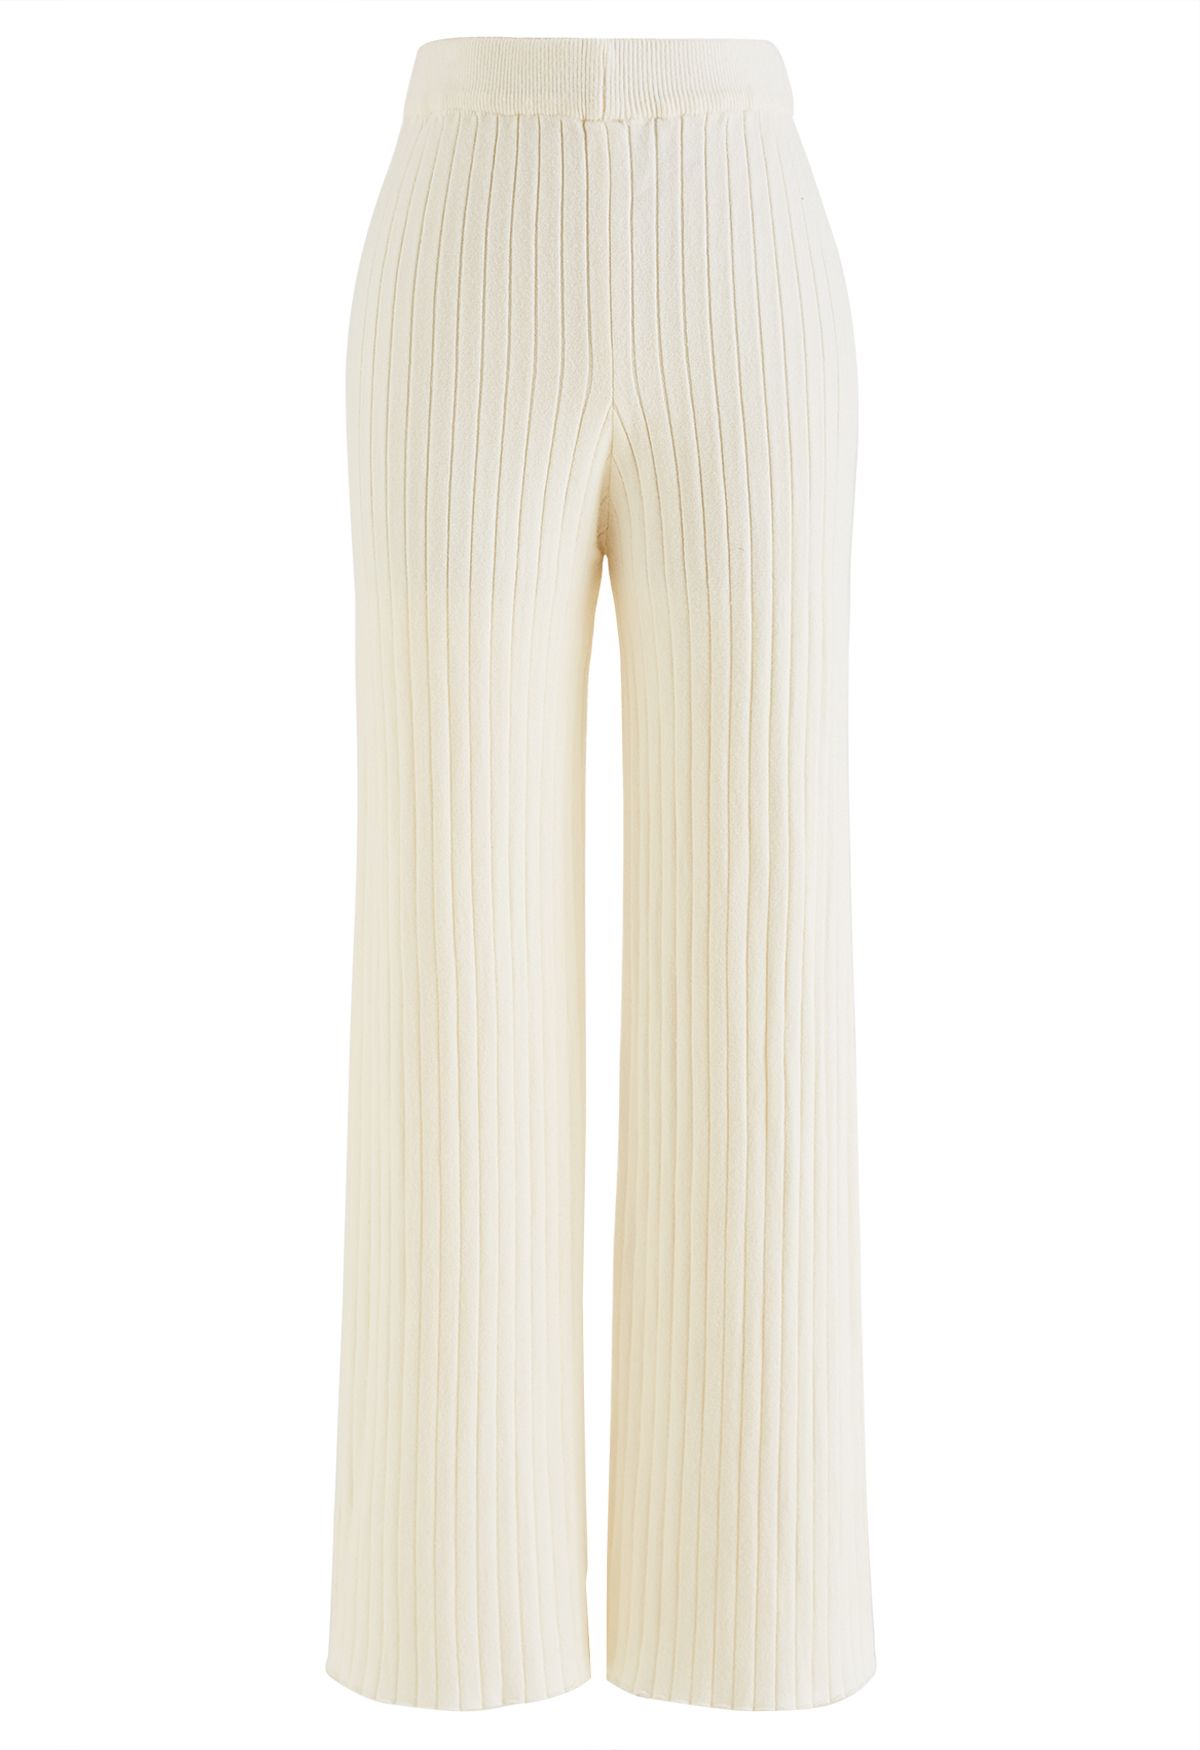 SYDNEY Ribbed Knit Pants - Cream